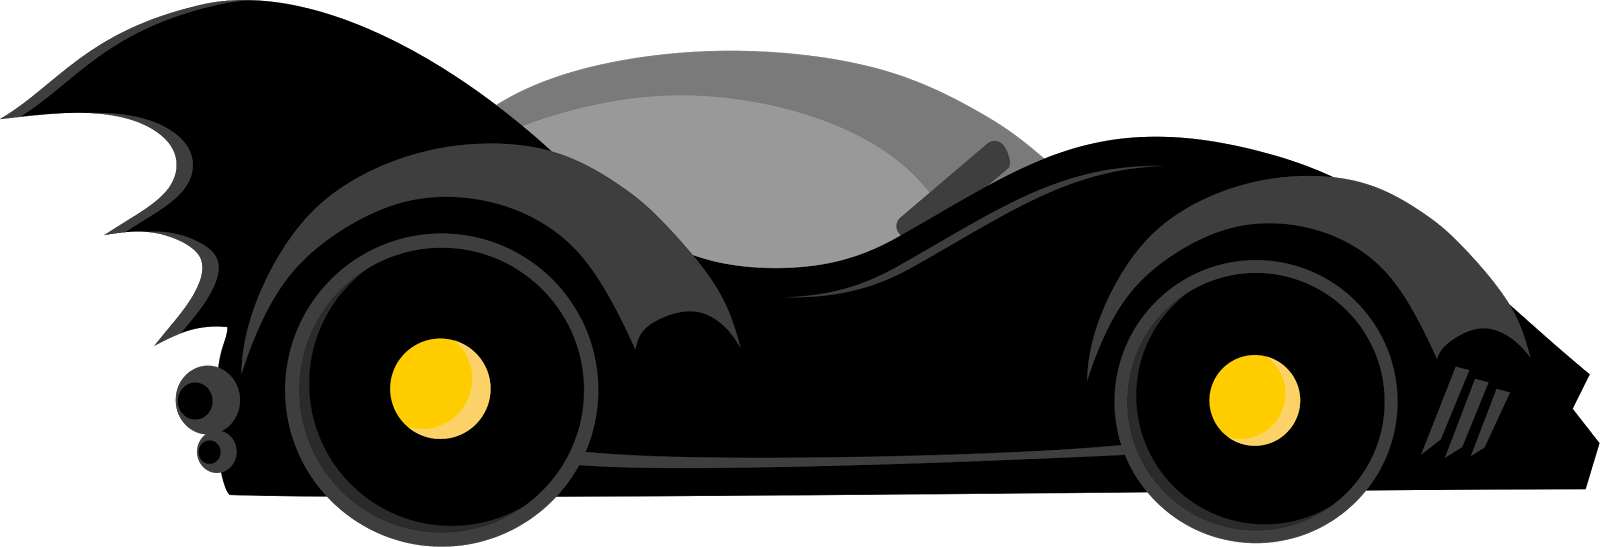 Batman car batcar . Wheel clipart transparent background